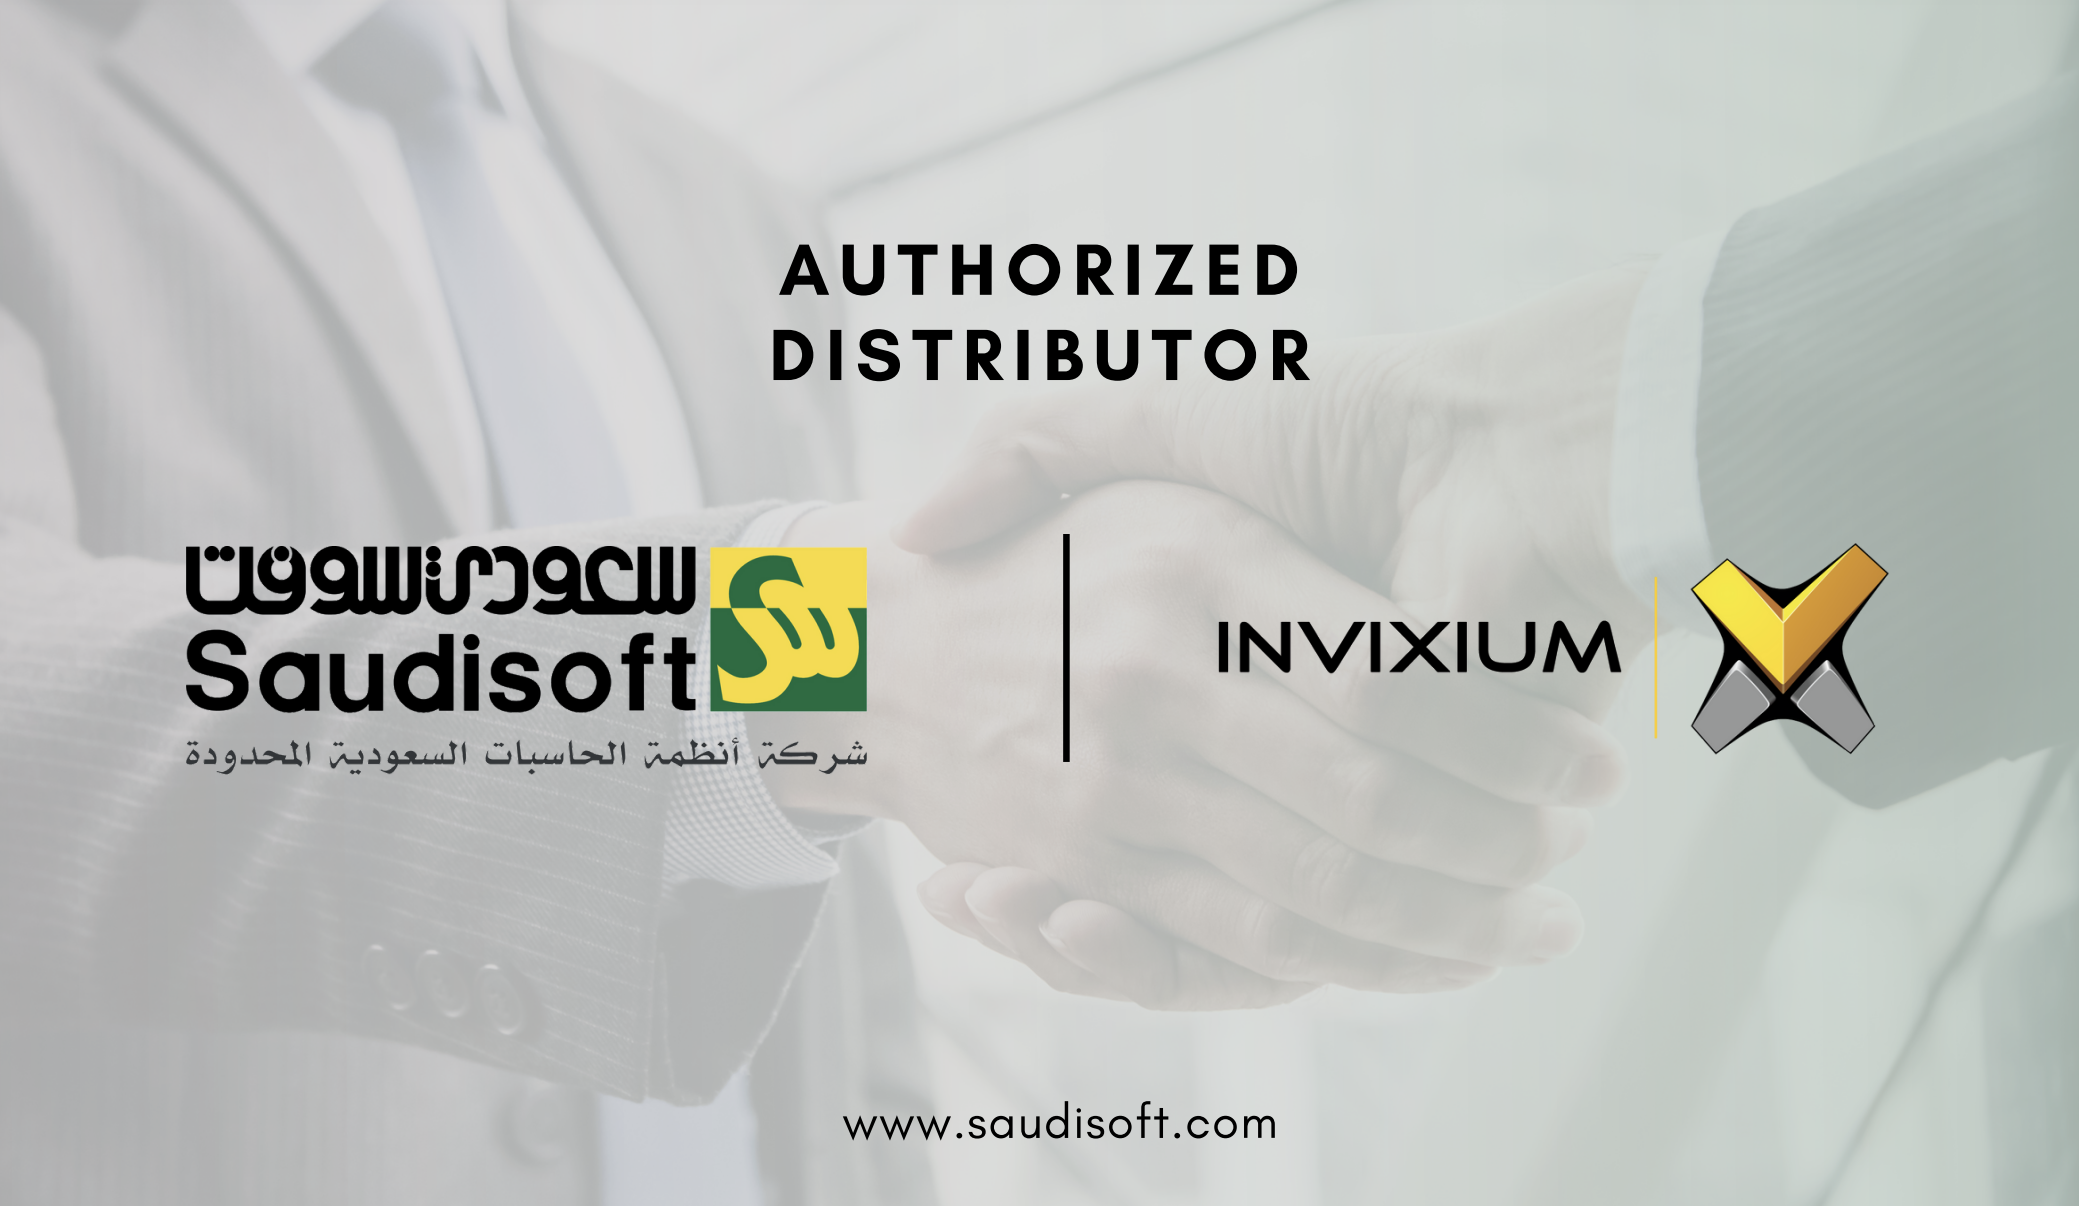 Saudisoft becomes Invixium's authorized distributor in Saudi Arabia